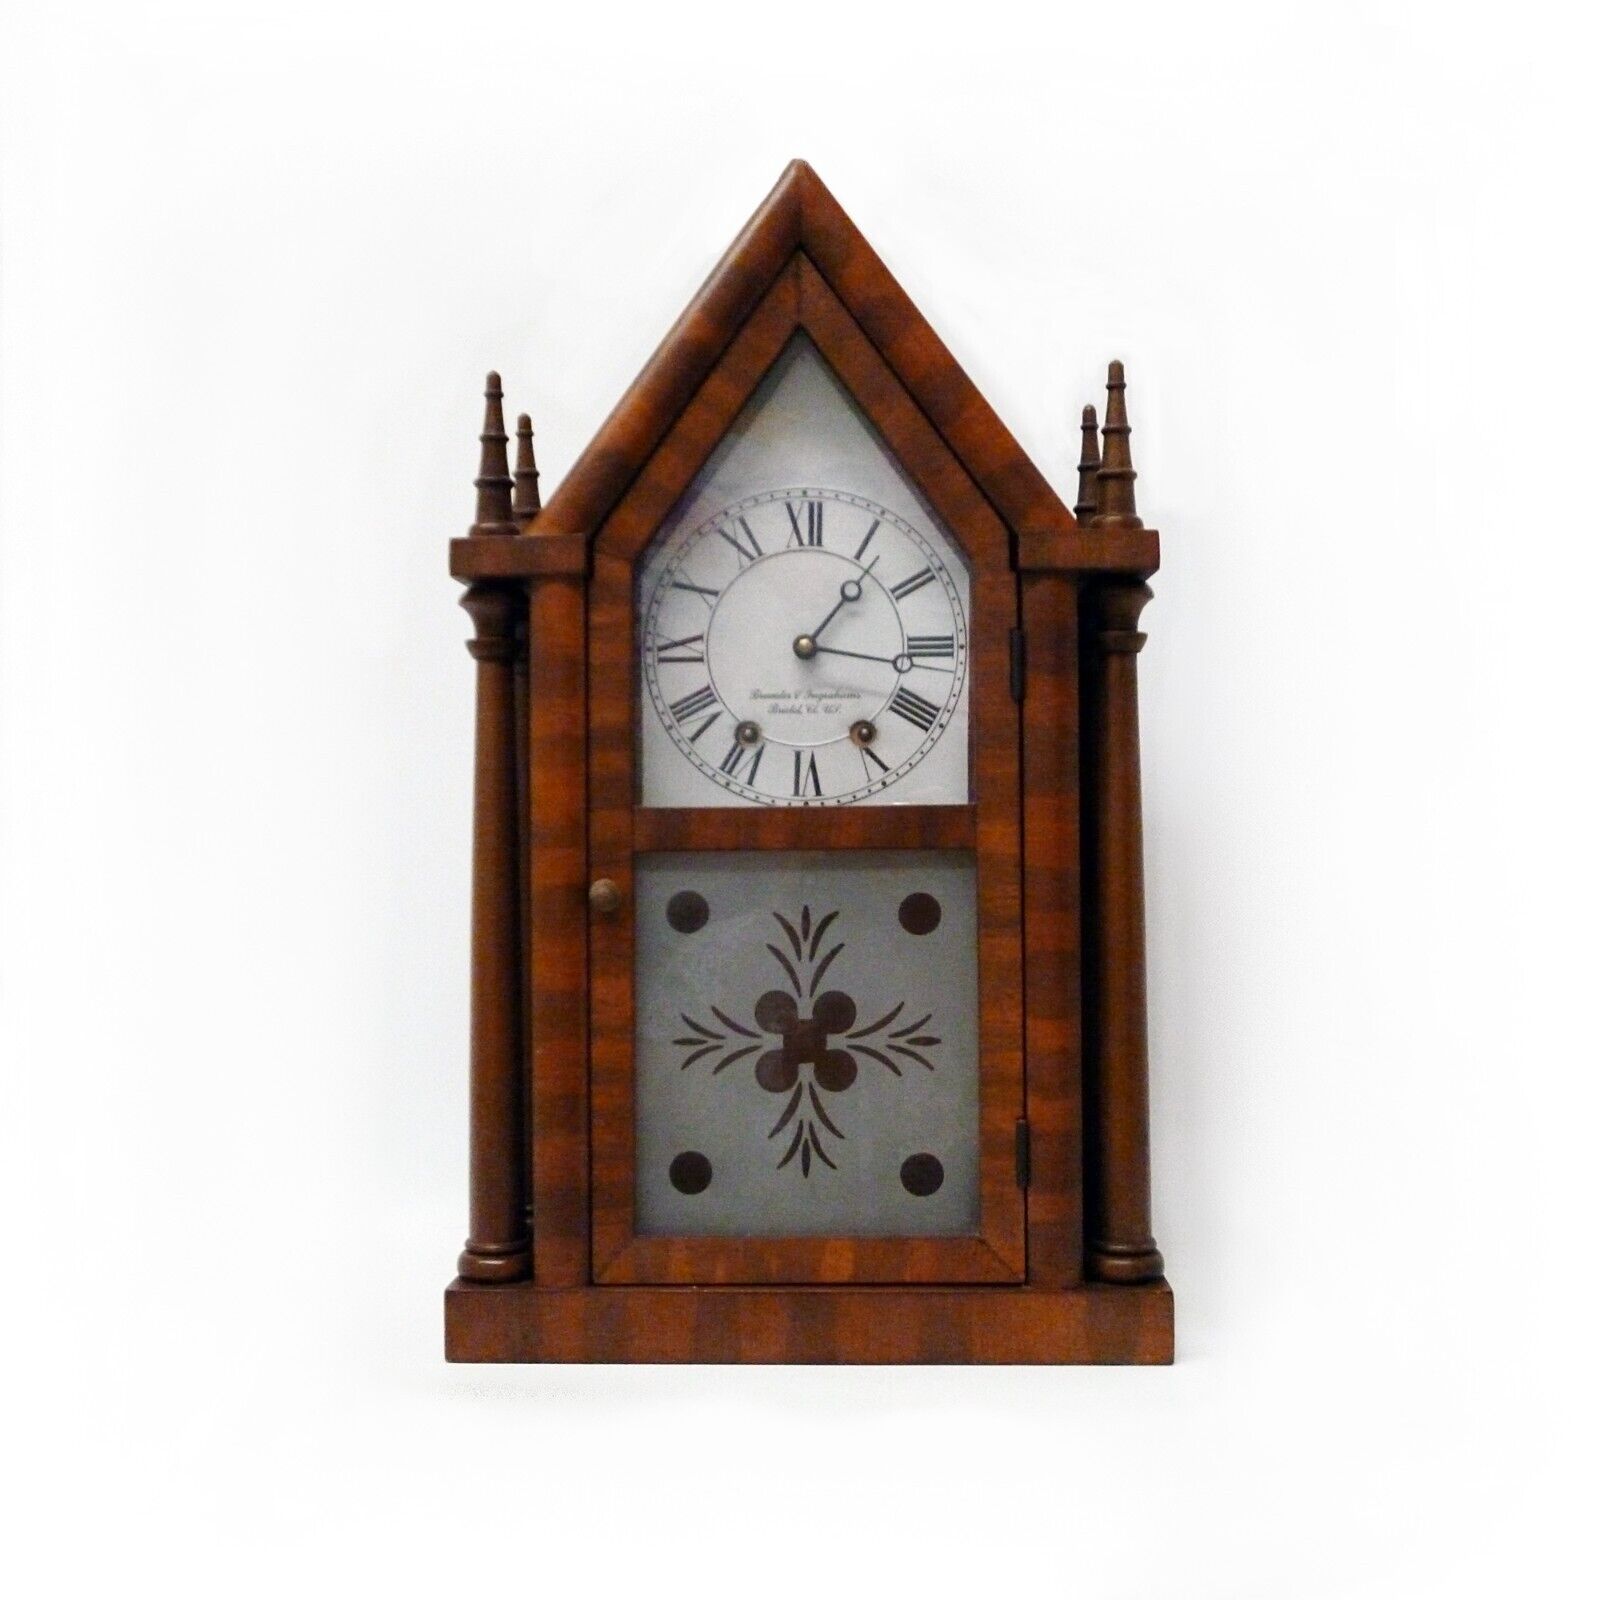 Henry Ford Museum Steeple Shelf Clock, 1970s Reproduction, Brewster & Ingrahams